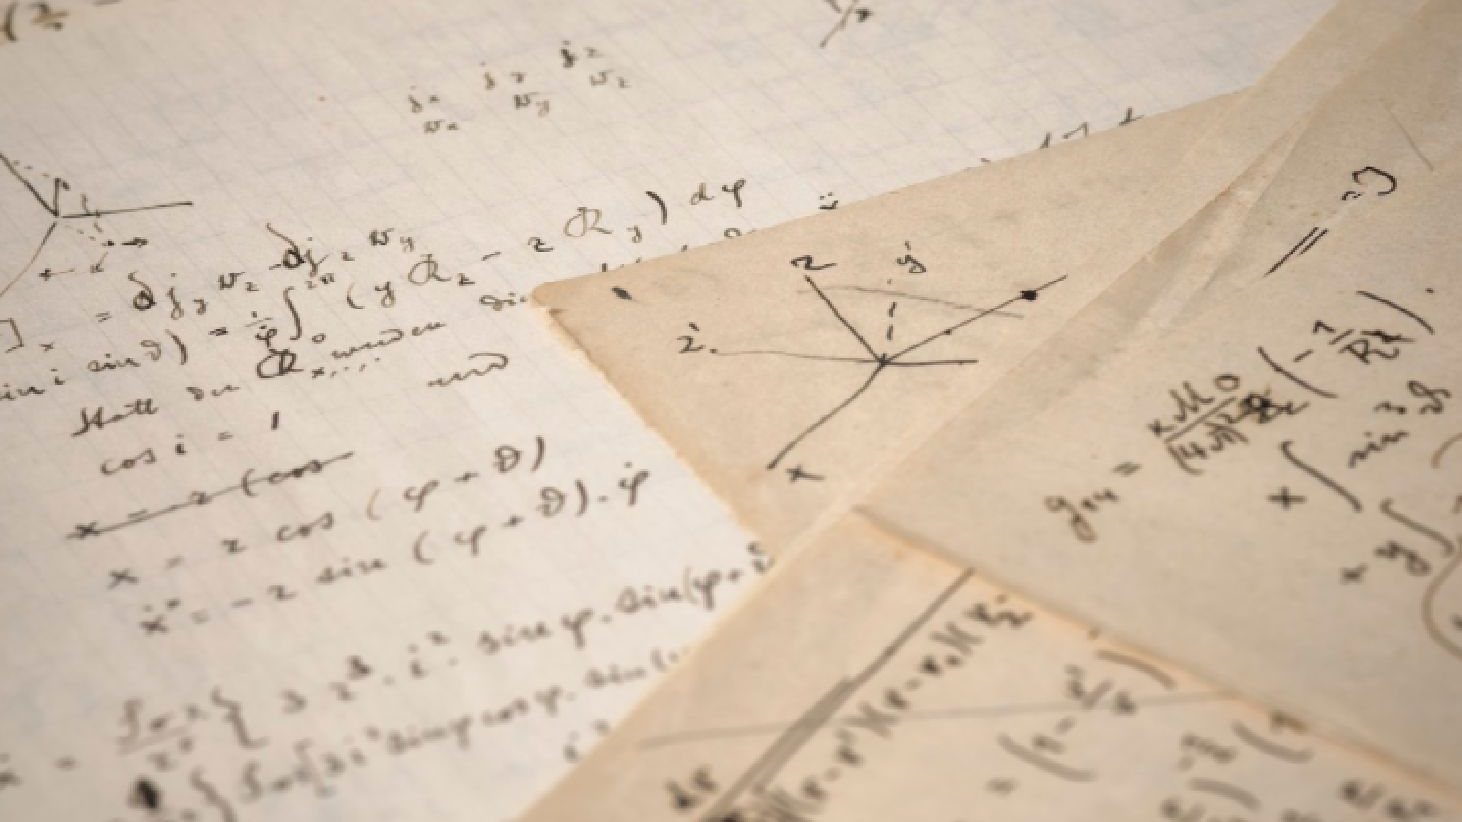 Manuscrito redigido por Albert Einstein entre 1913 e 1914